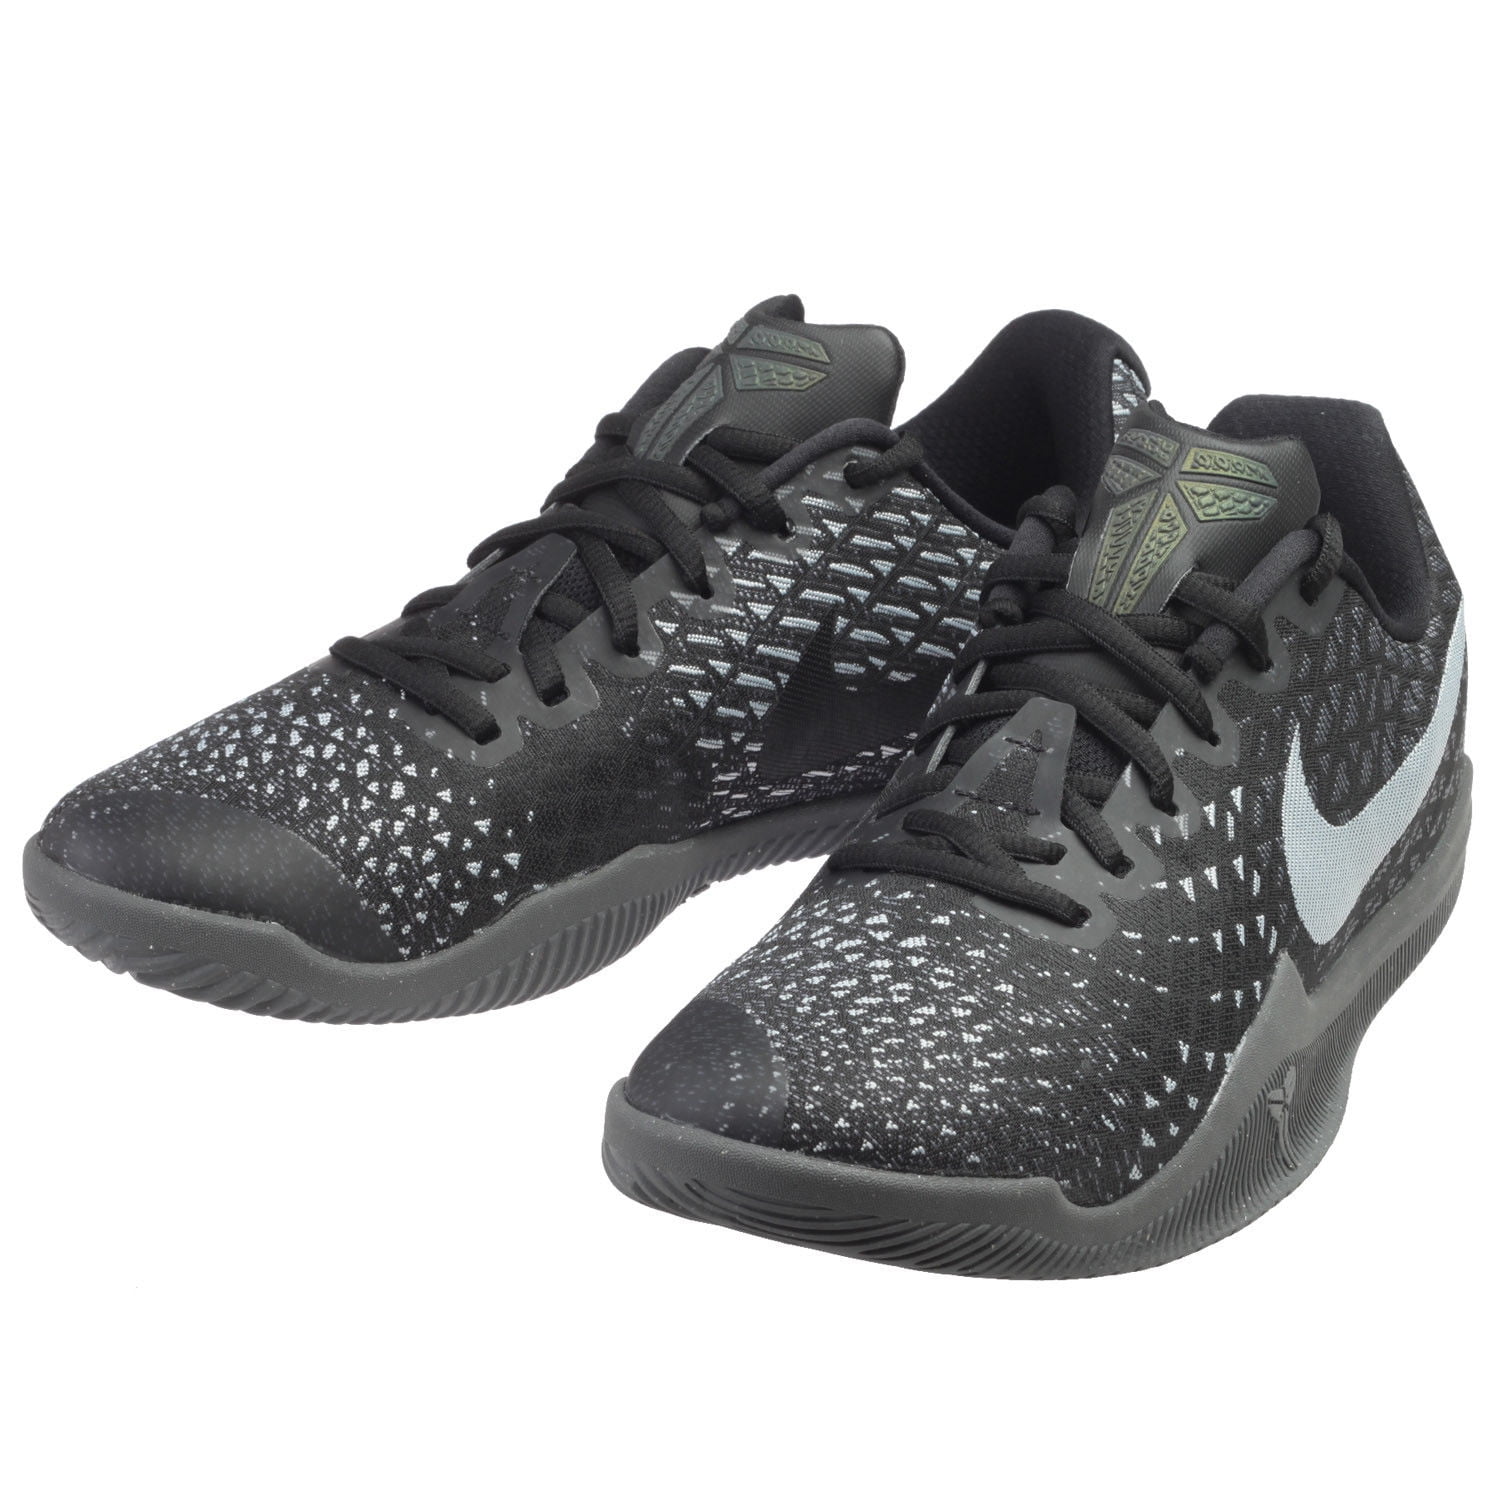 Sospechar Vista Centelleo Nike Men's Kobe Mamba Instinct Basketball Shoes - Grey/Black - 12.0 -  Walmart.com